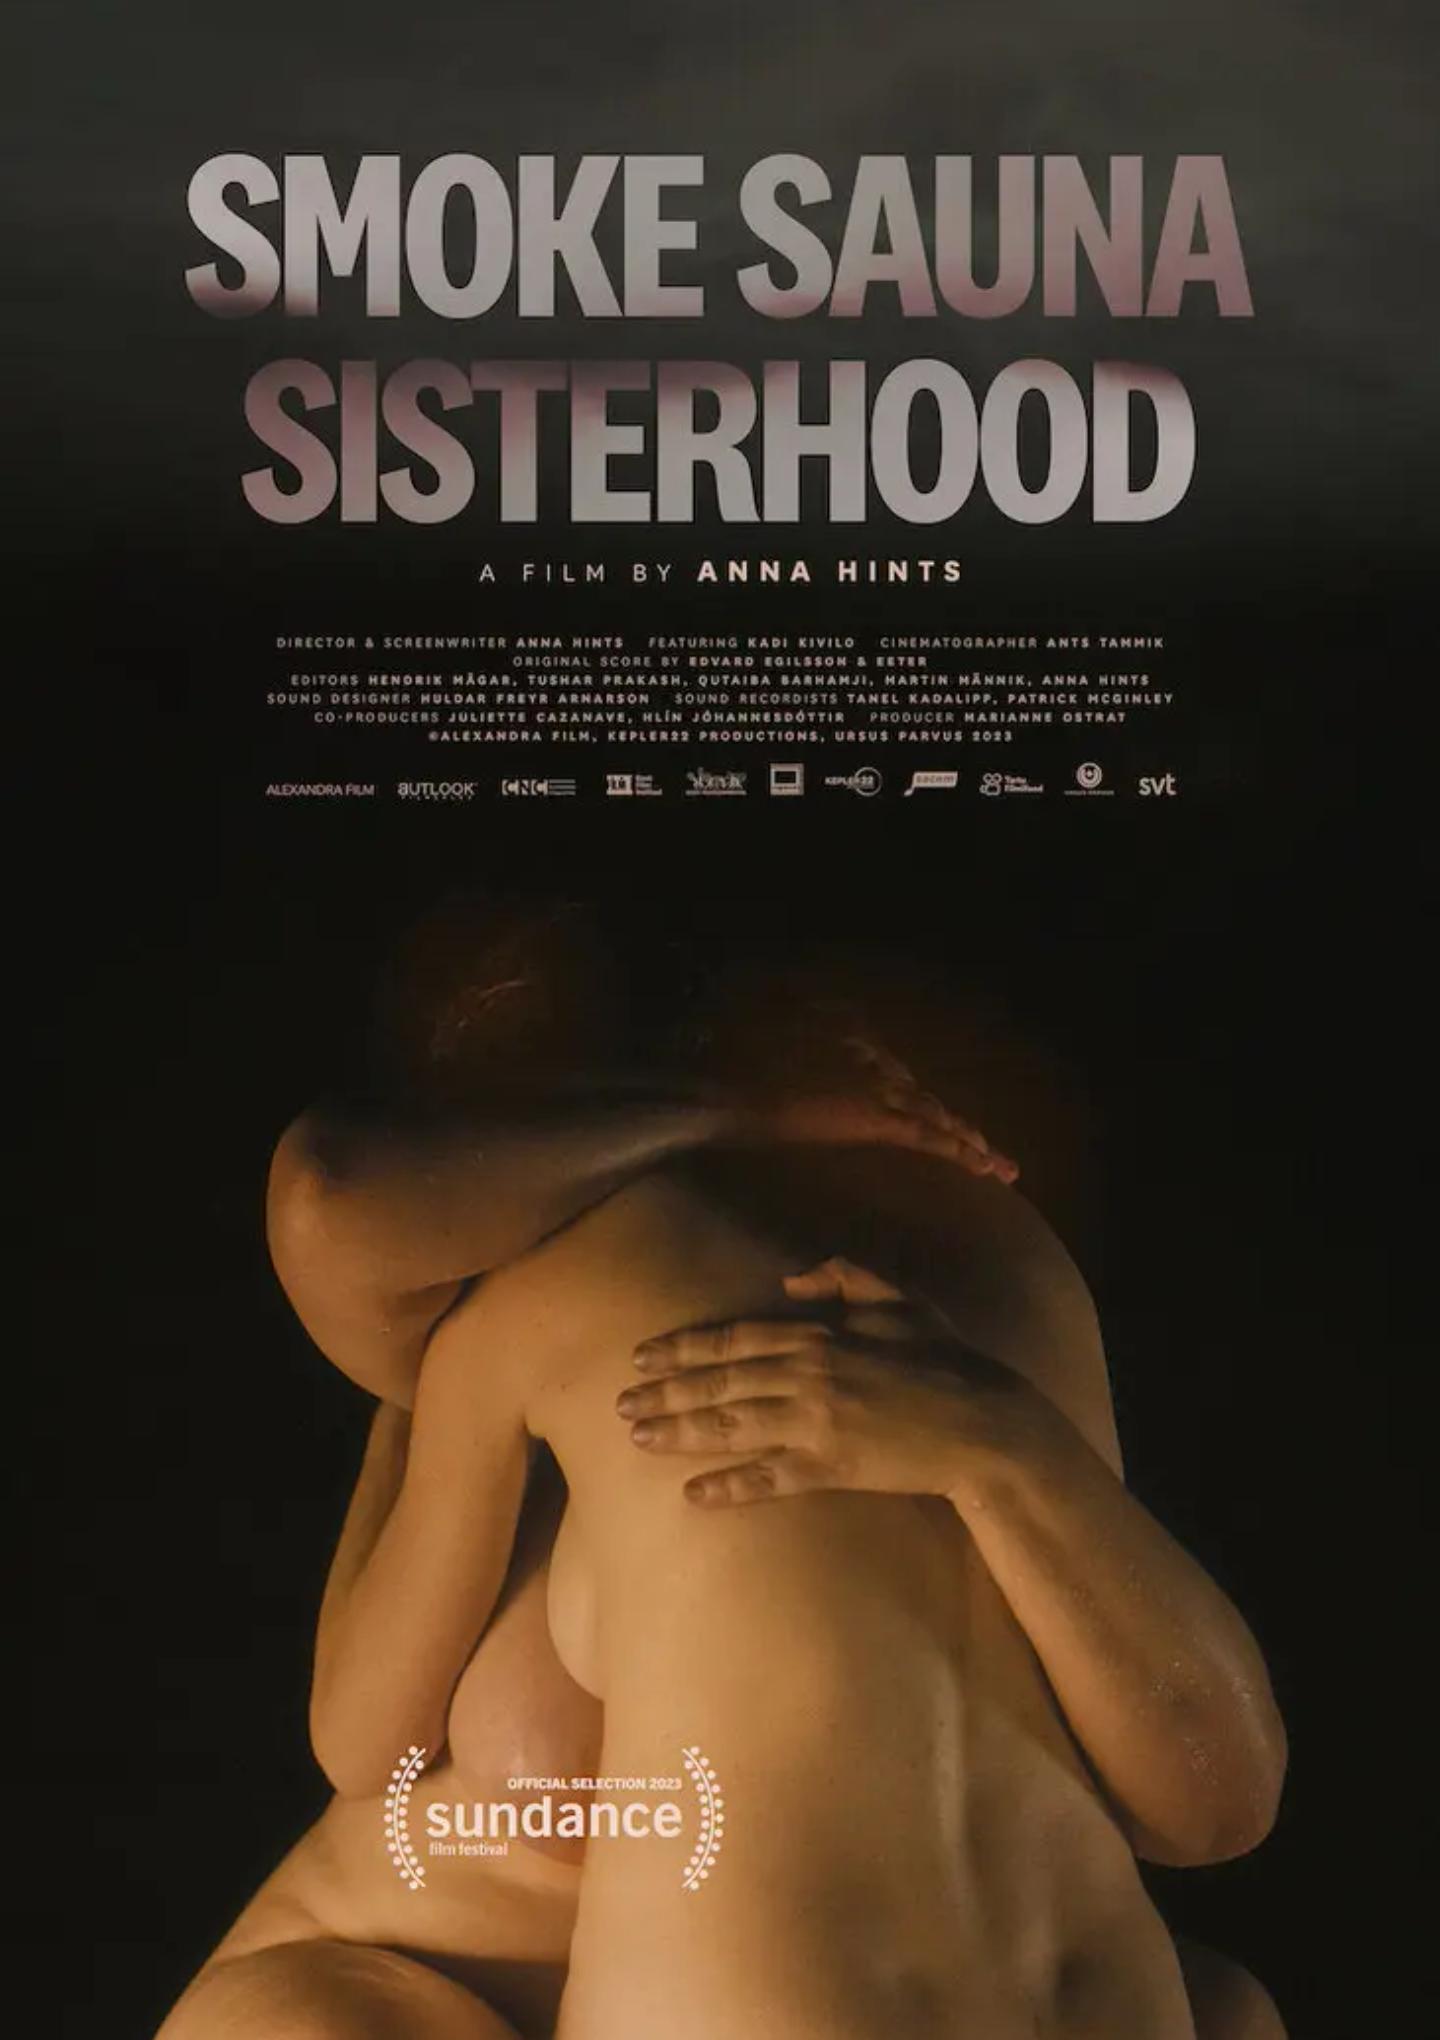 Plakat for 'Smoke Sauna Sisterhood'